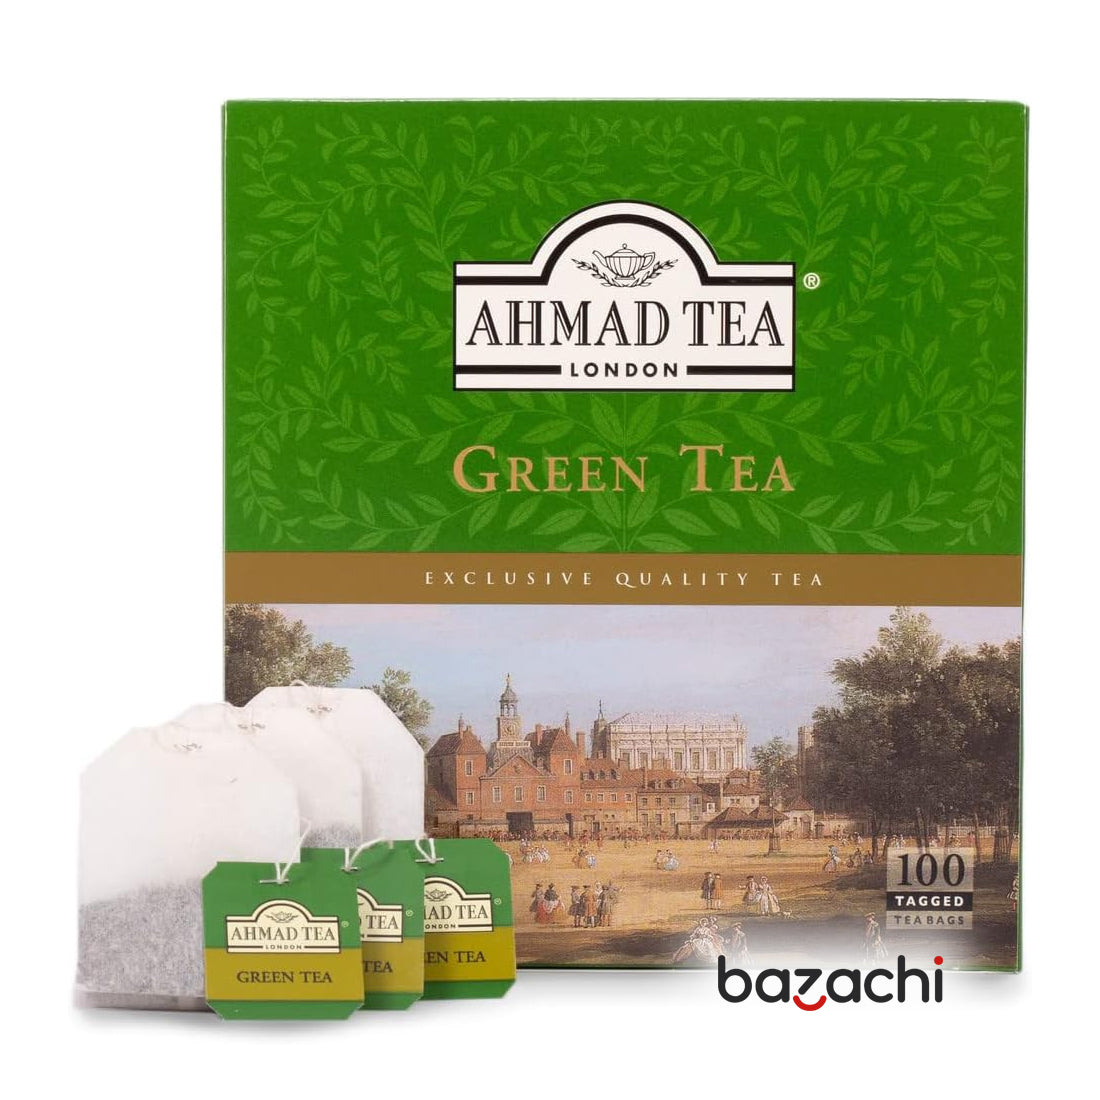 Ahmad Tea Bags Green Tea (100 bags)